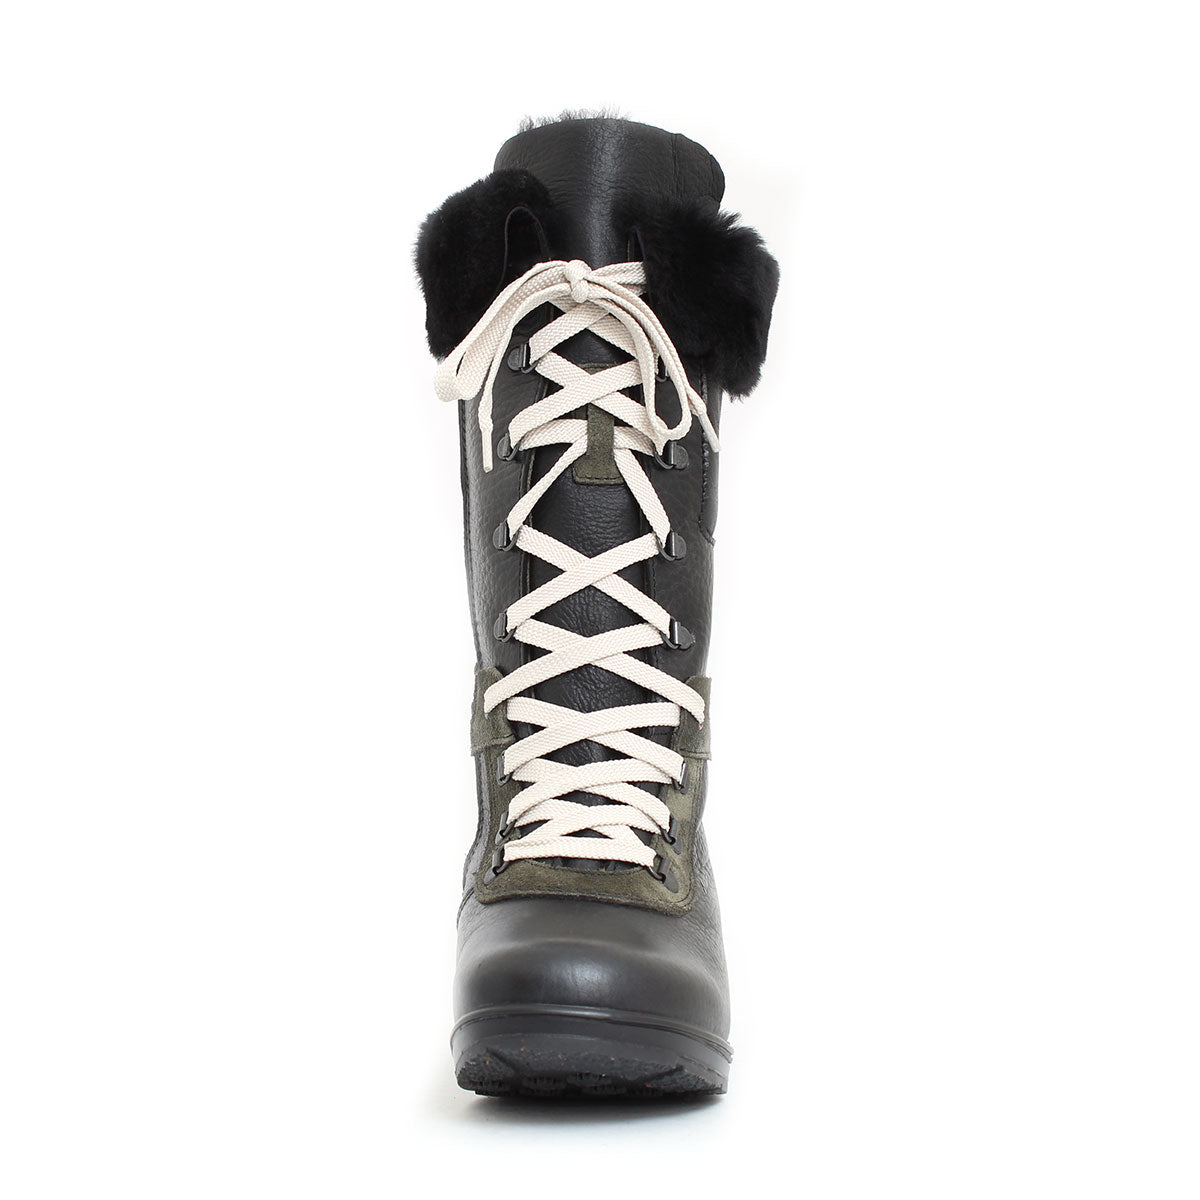 Maggie winter boot for women 